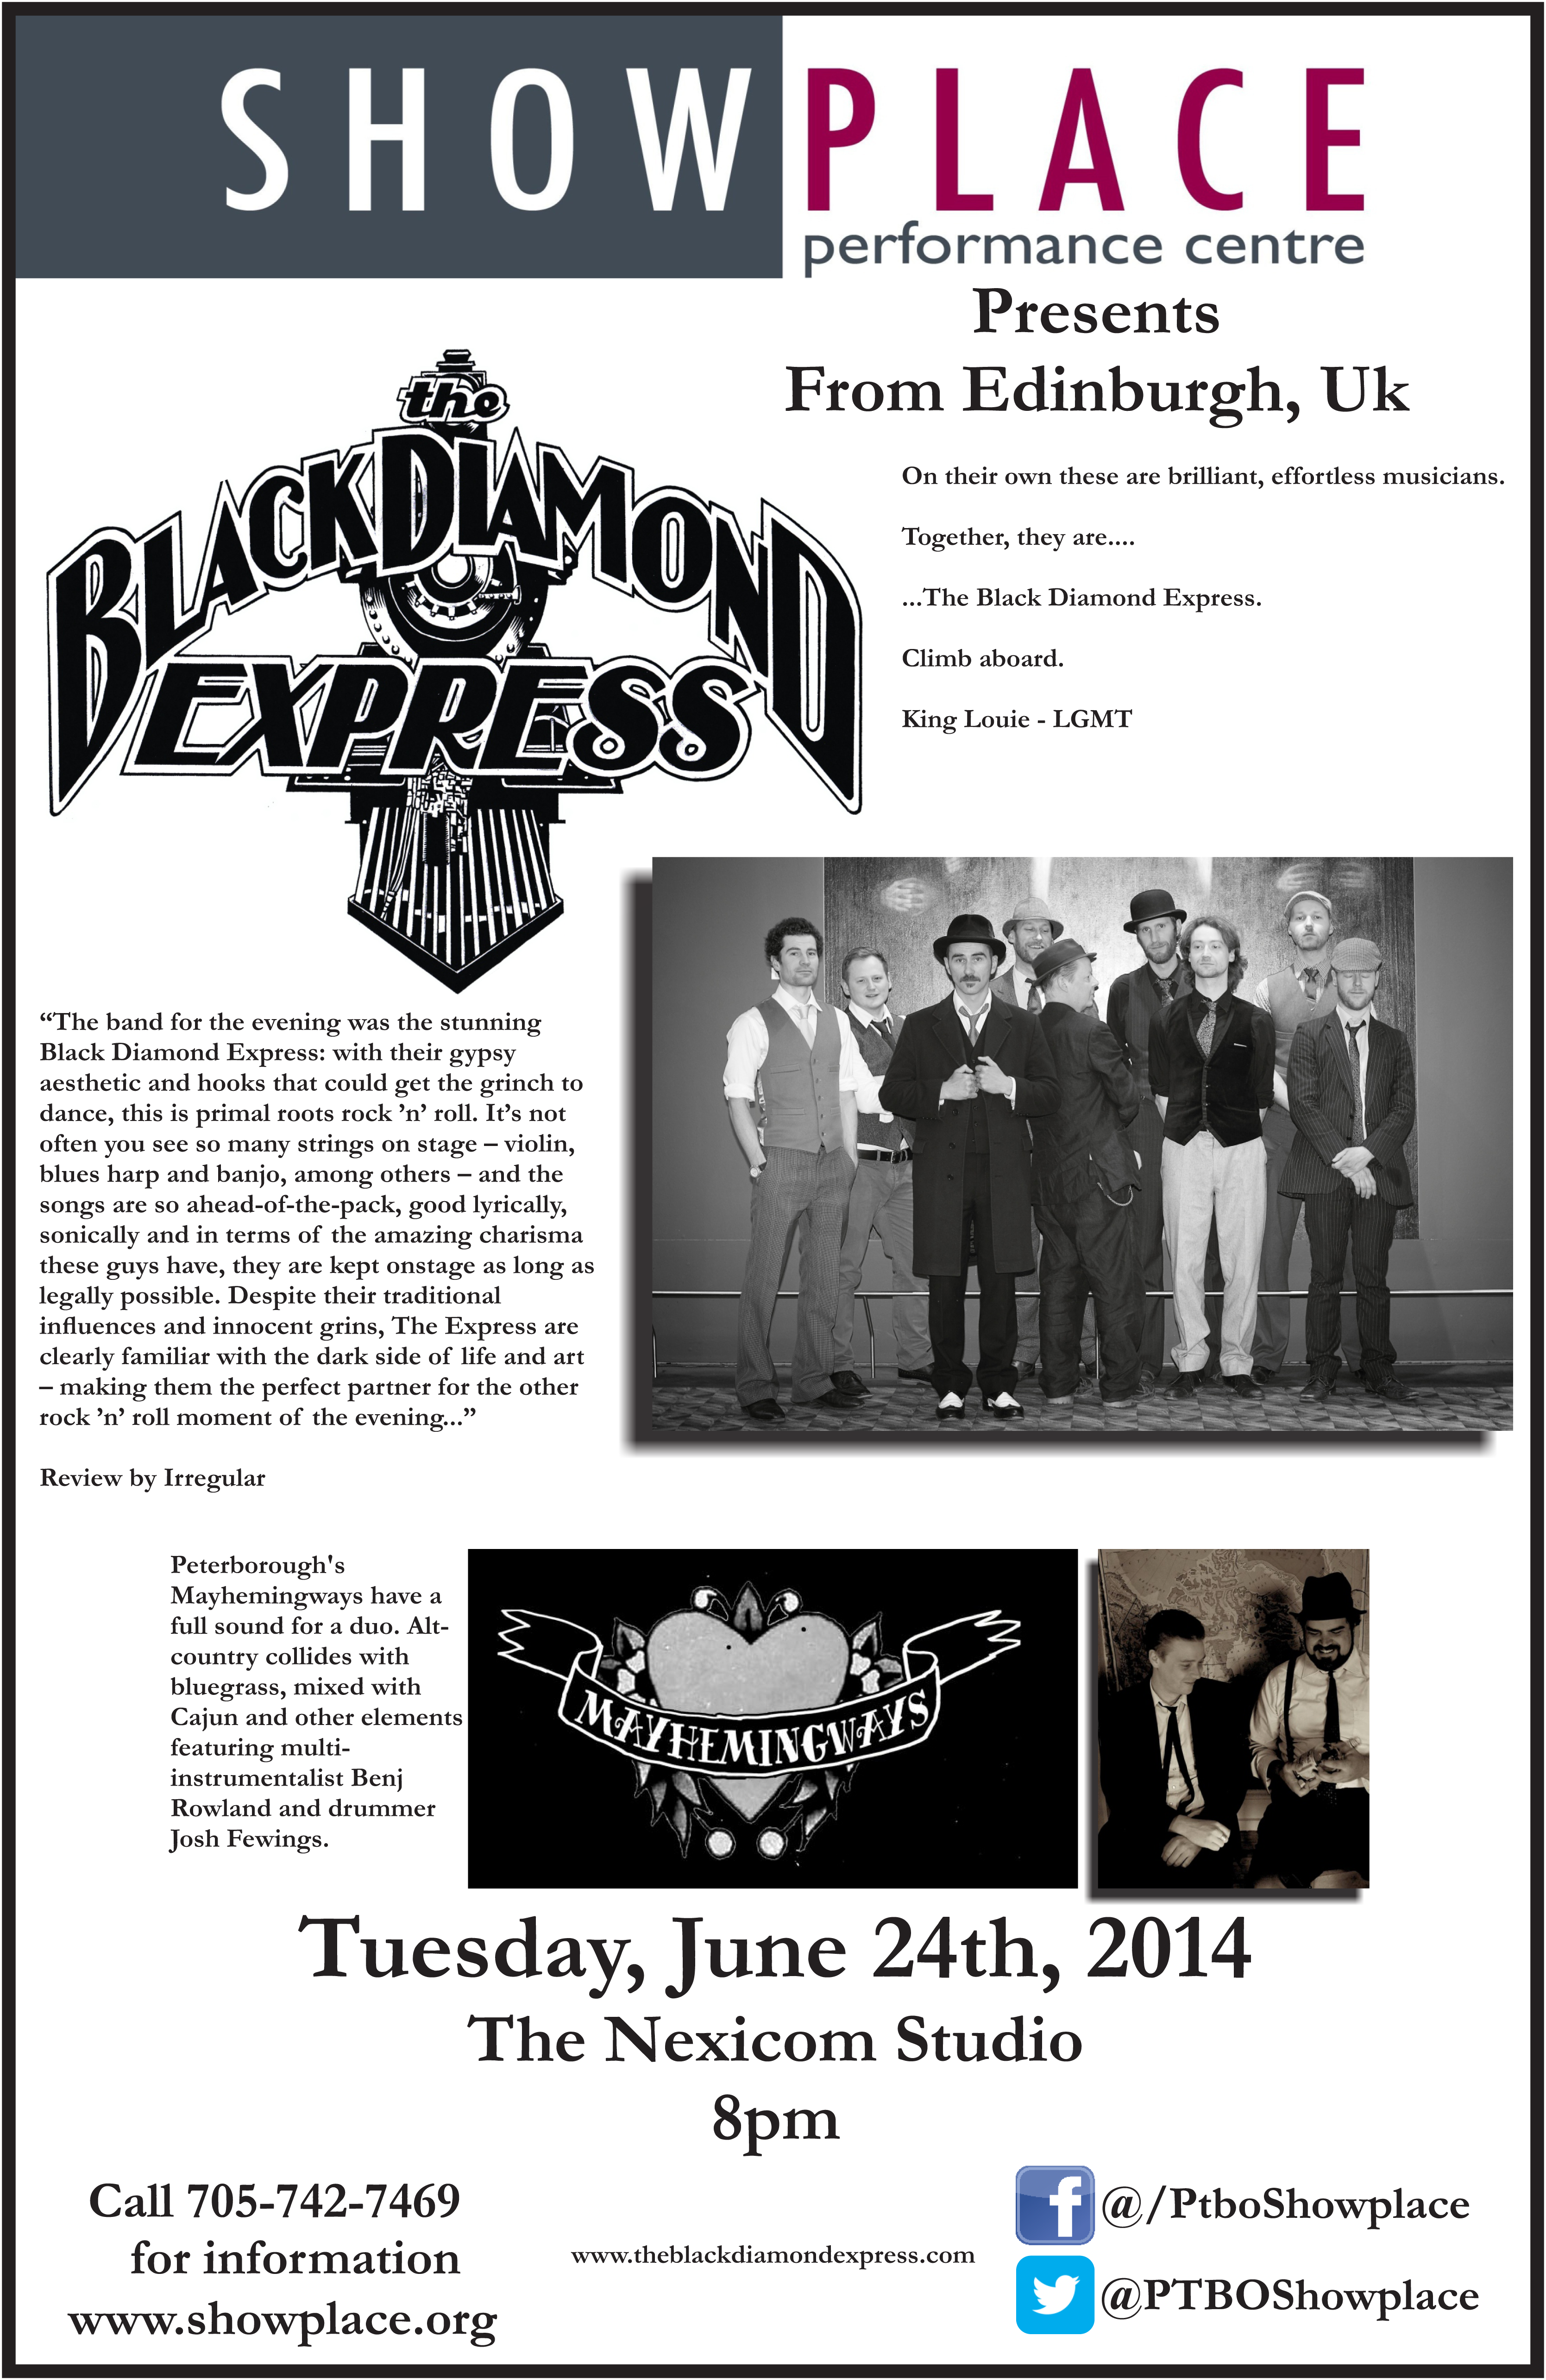 Black Diamond Express June 24th, 2014!